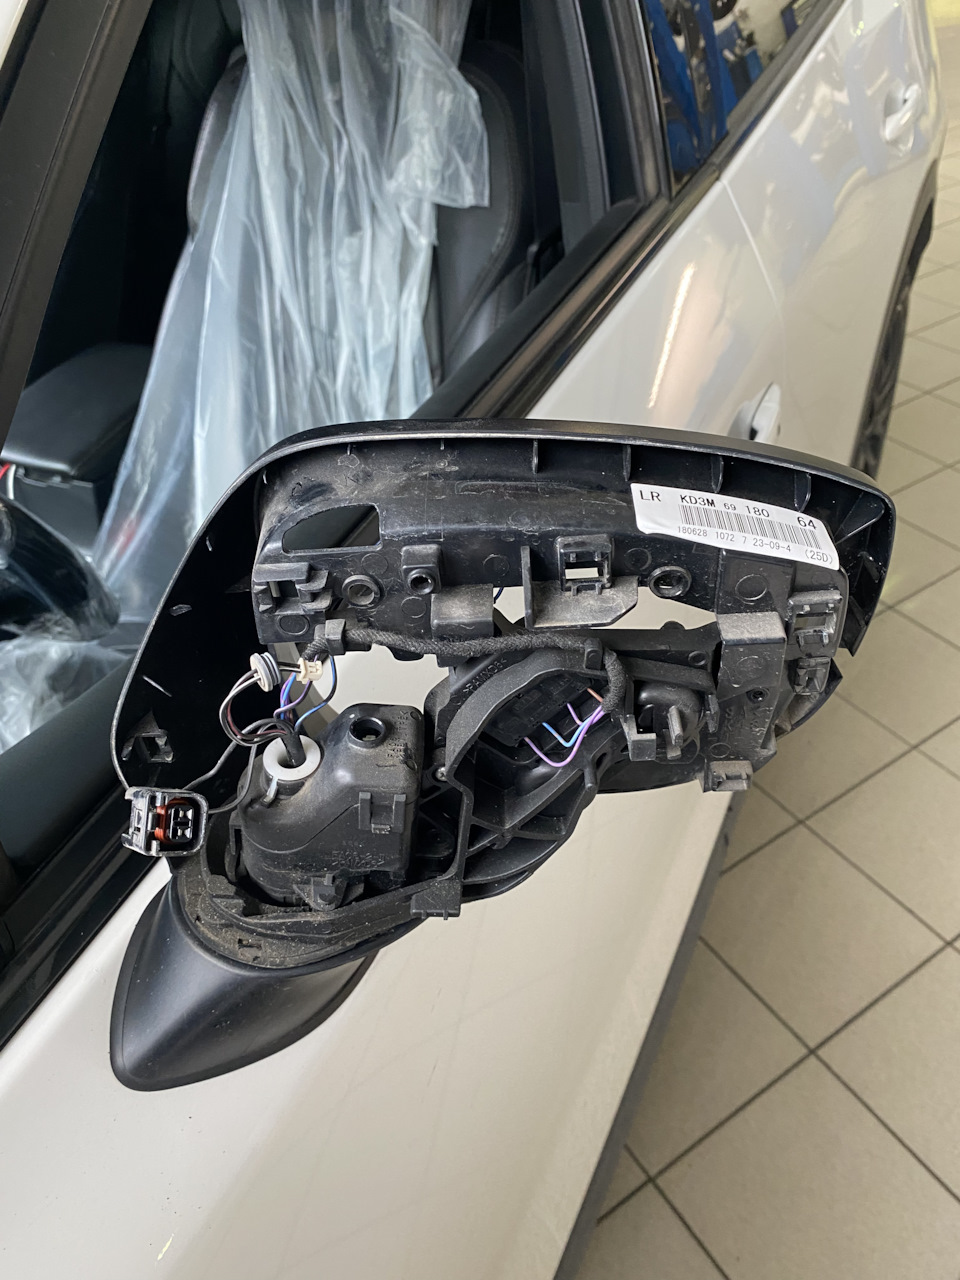 Складывание зеркал мазда сх 5. Механизм складывания зеркала Mazda CX-5. Складывания зеркал Мазда цх5. Моторчик зеркала Мазда СХ-5 2014 года. Подогрев боковых зеркал Мазда сх5.